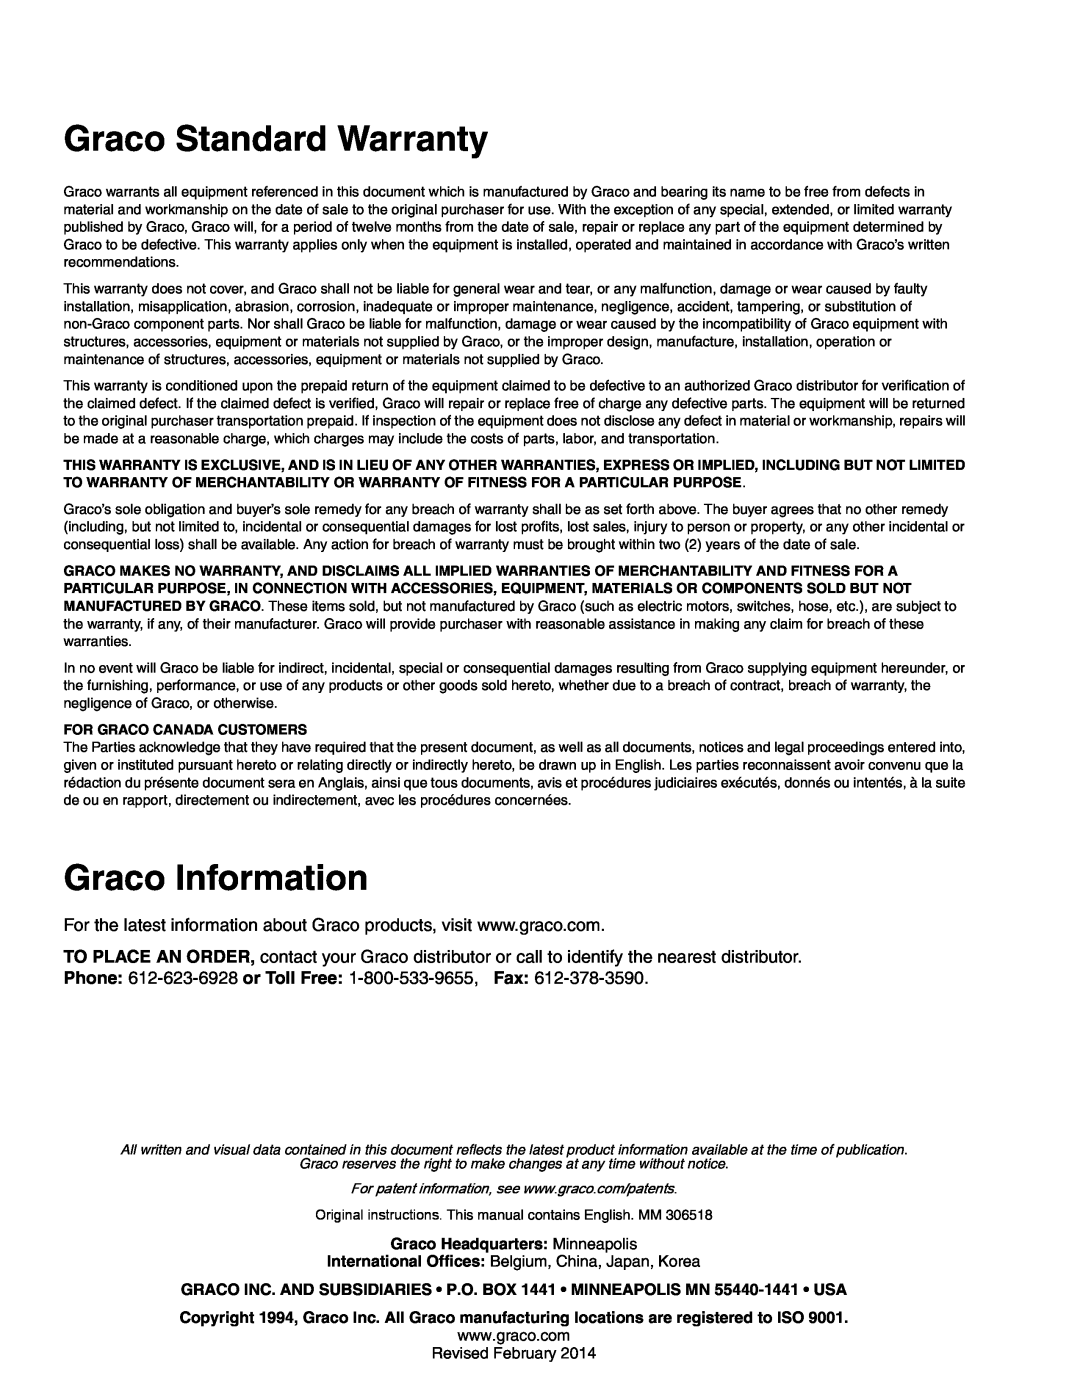 Graco 306518ZAC important safety instructions Graco Standard Warranty, Graco Information 